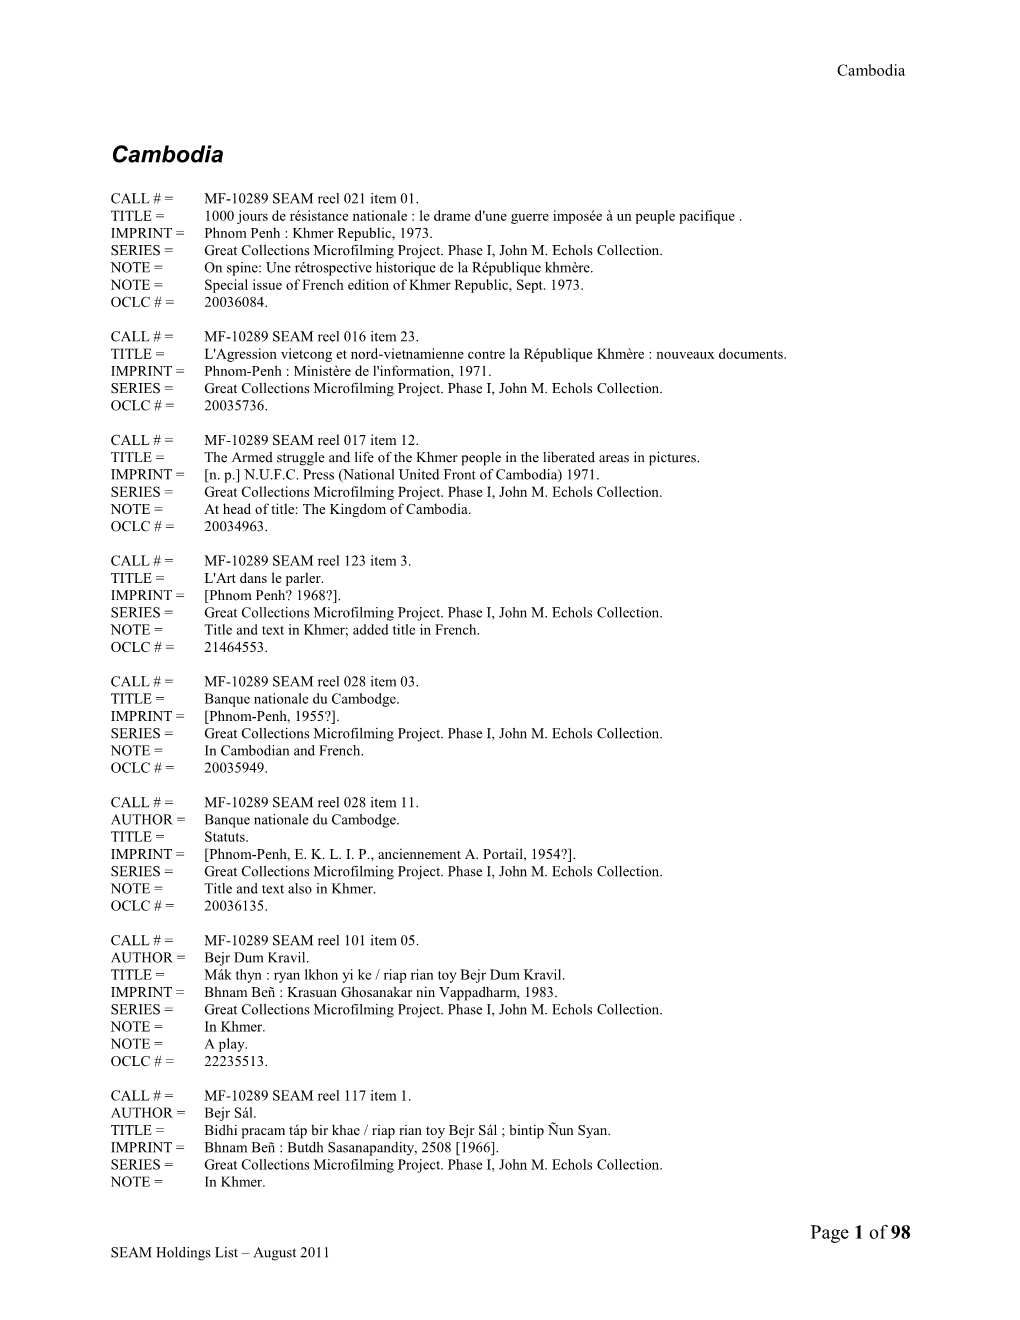 SEAM Holdings List – August 2011 Cambodia